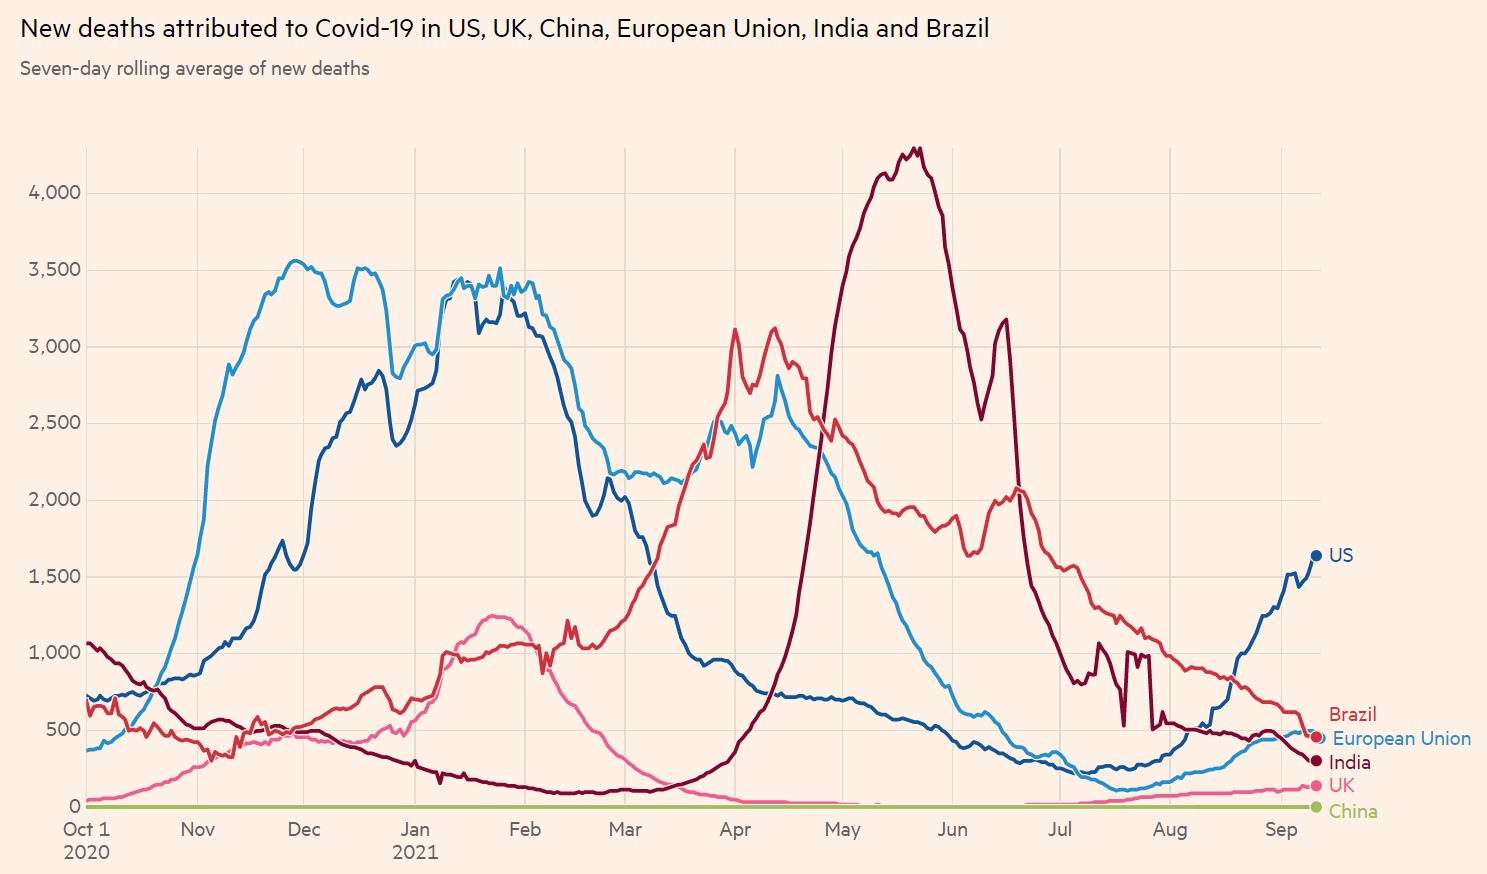 New deaths Covid-19 US UK China EU India Brazil 1-10-2020 to 11-9-2021 - enlarge